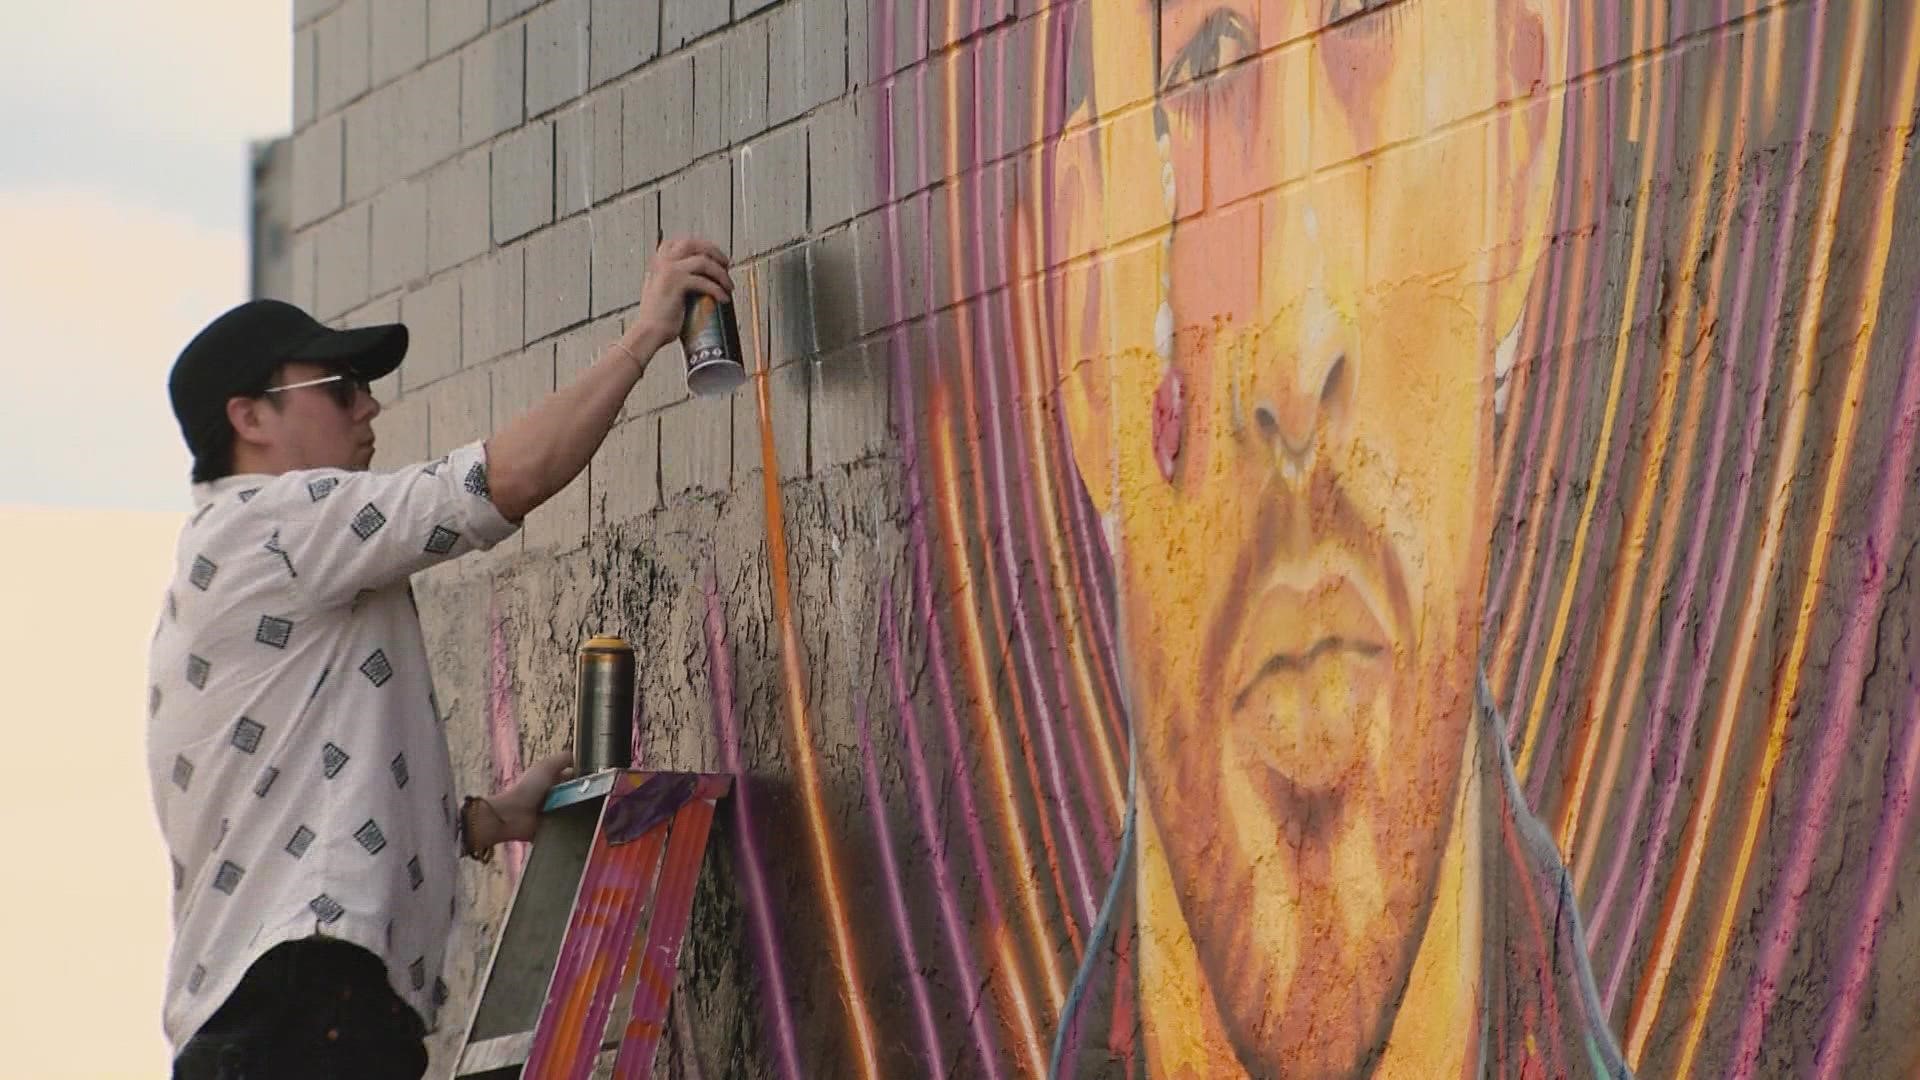 He has been creating San Antonio murals for over a decade.